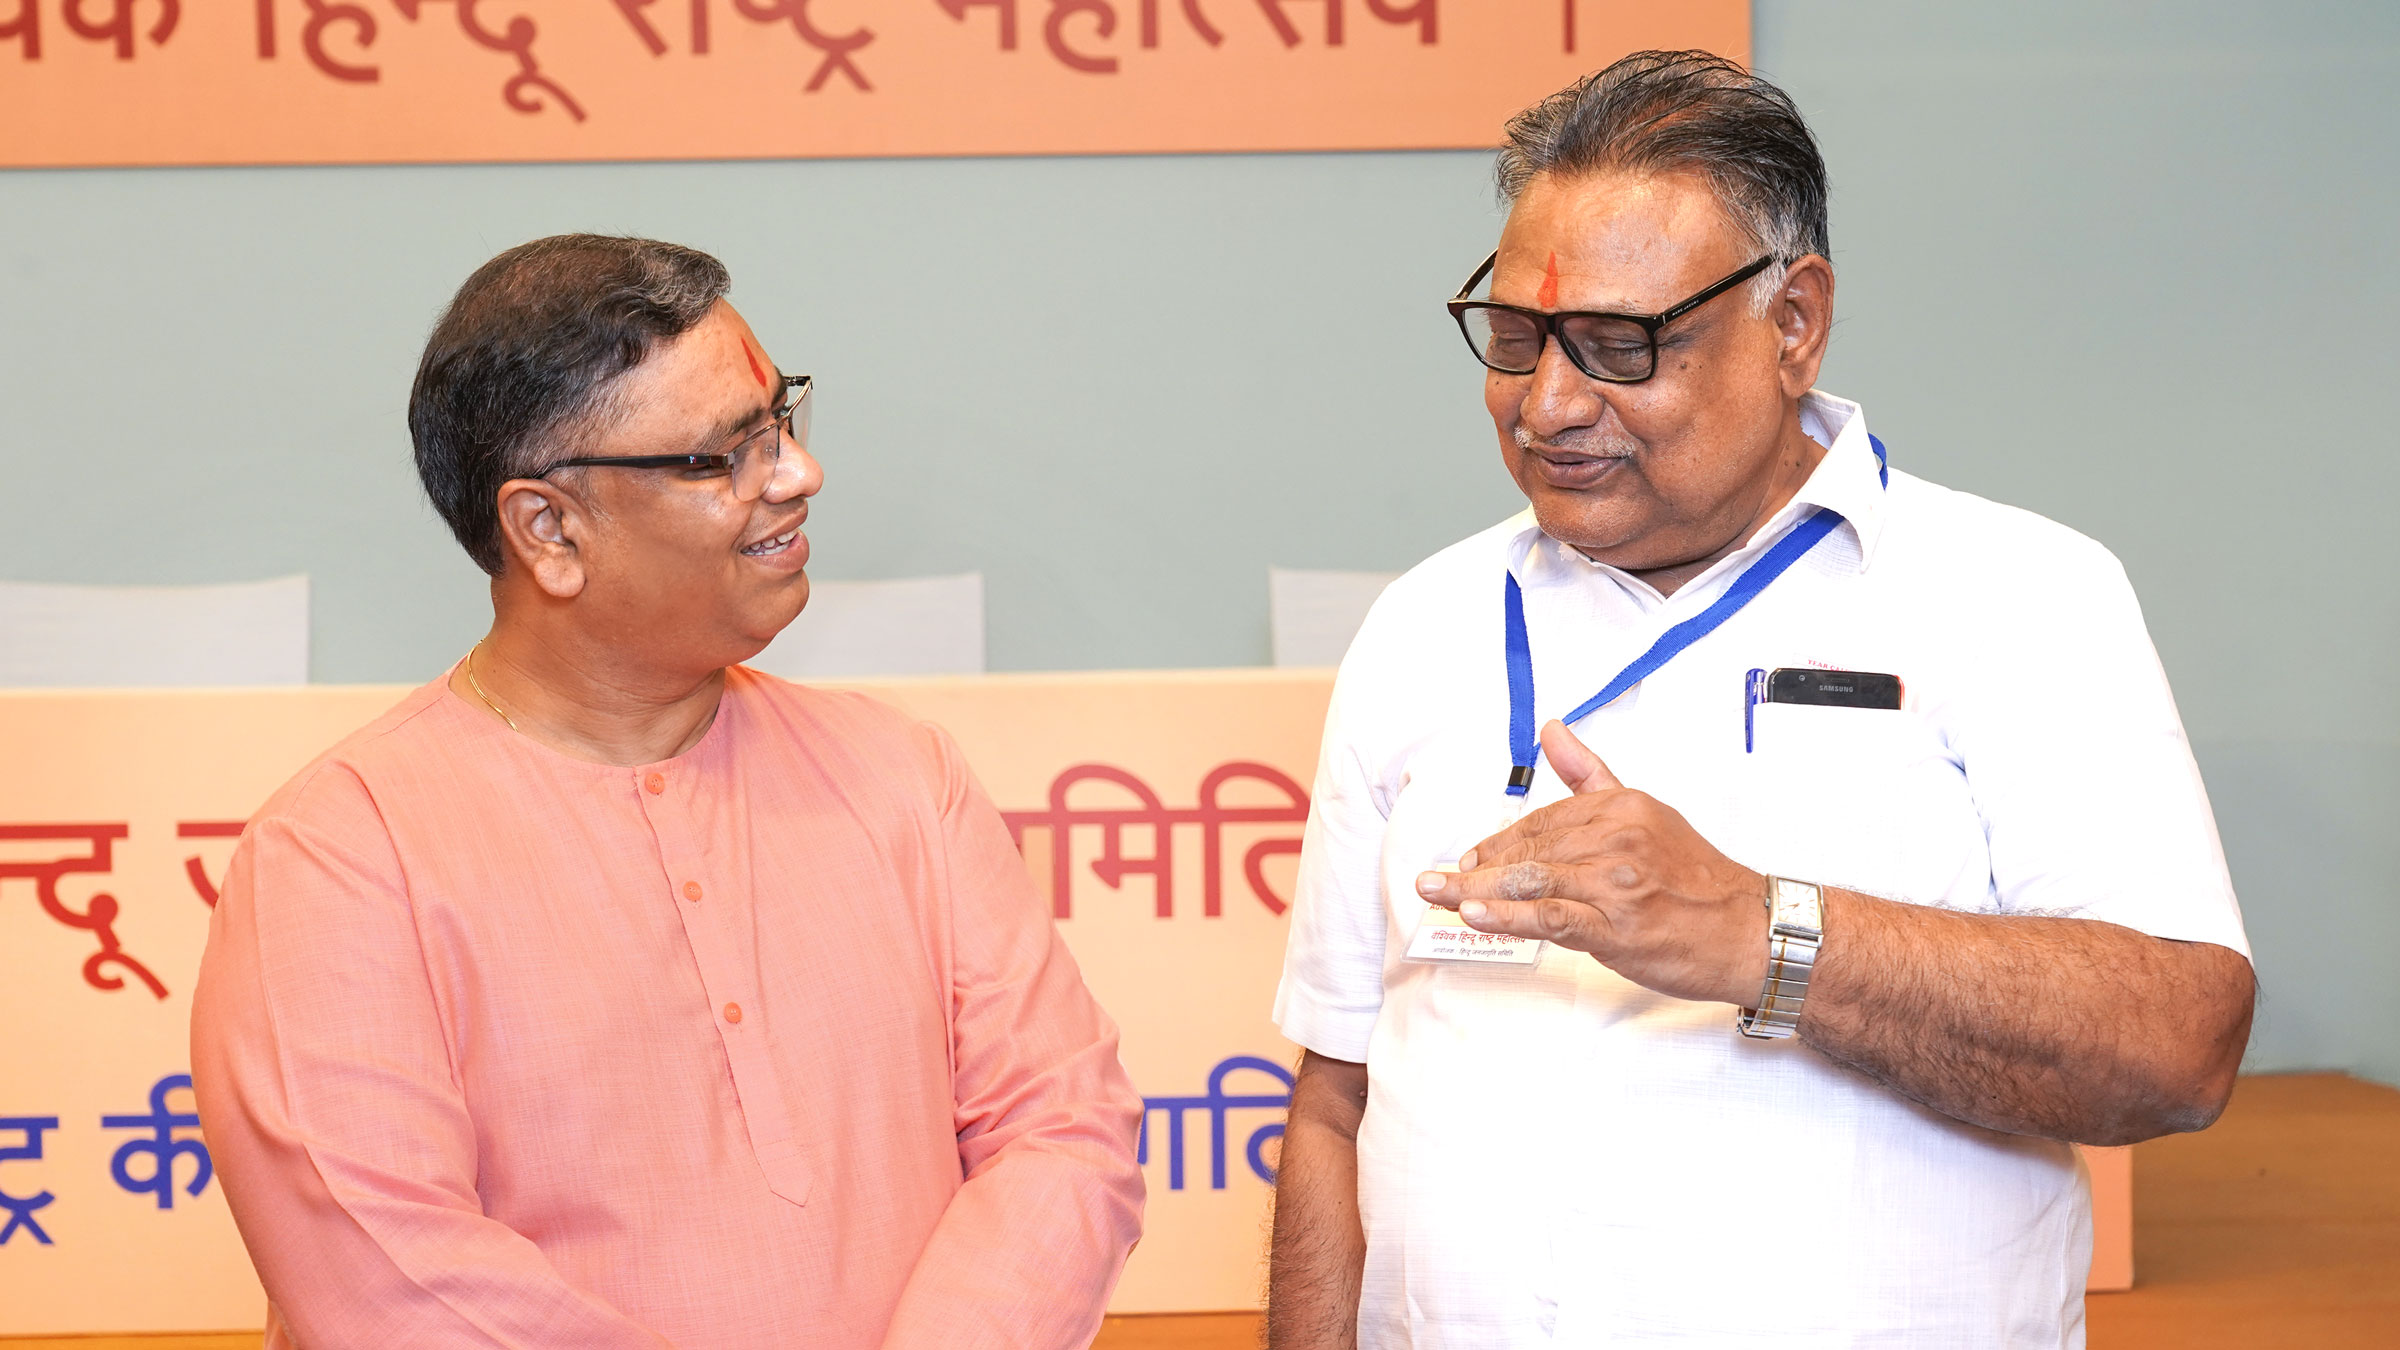 (From right) Adv. Bharat Deshmukh (Ex. Chairman, Maharashtra & Goa Bar Council) in discussion with Mr Ramesh Shinde (National Spokesperson, Hindu Janajagruti Samiti)